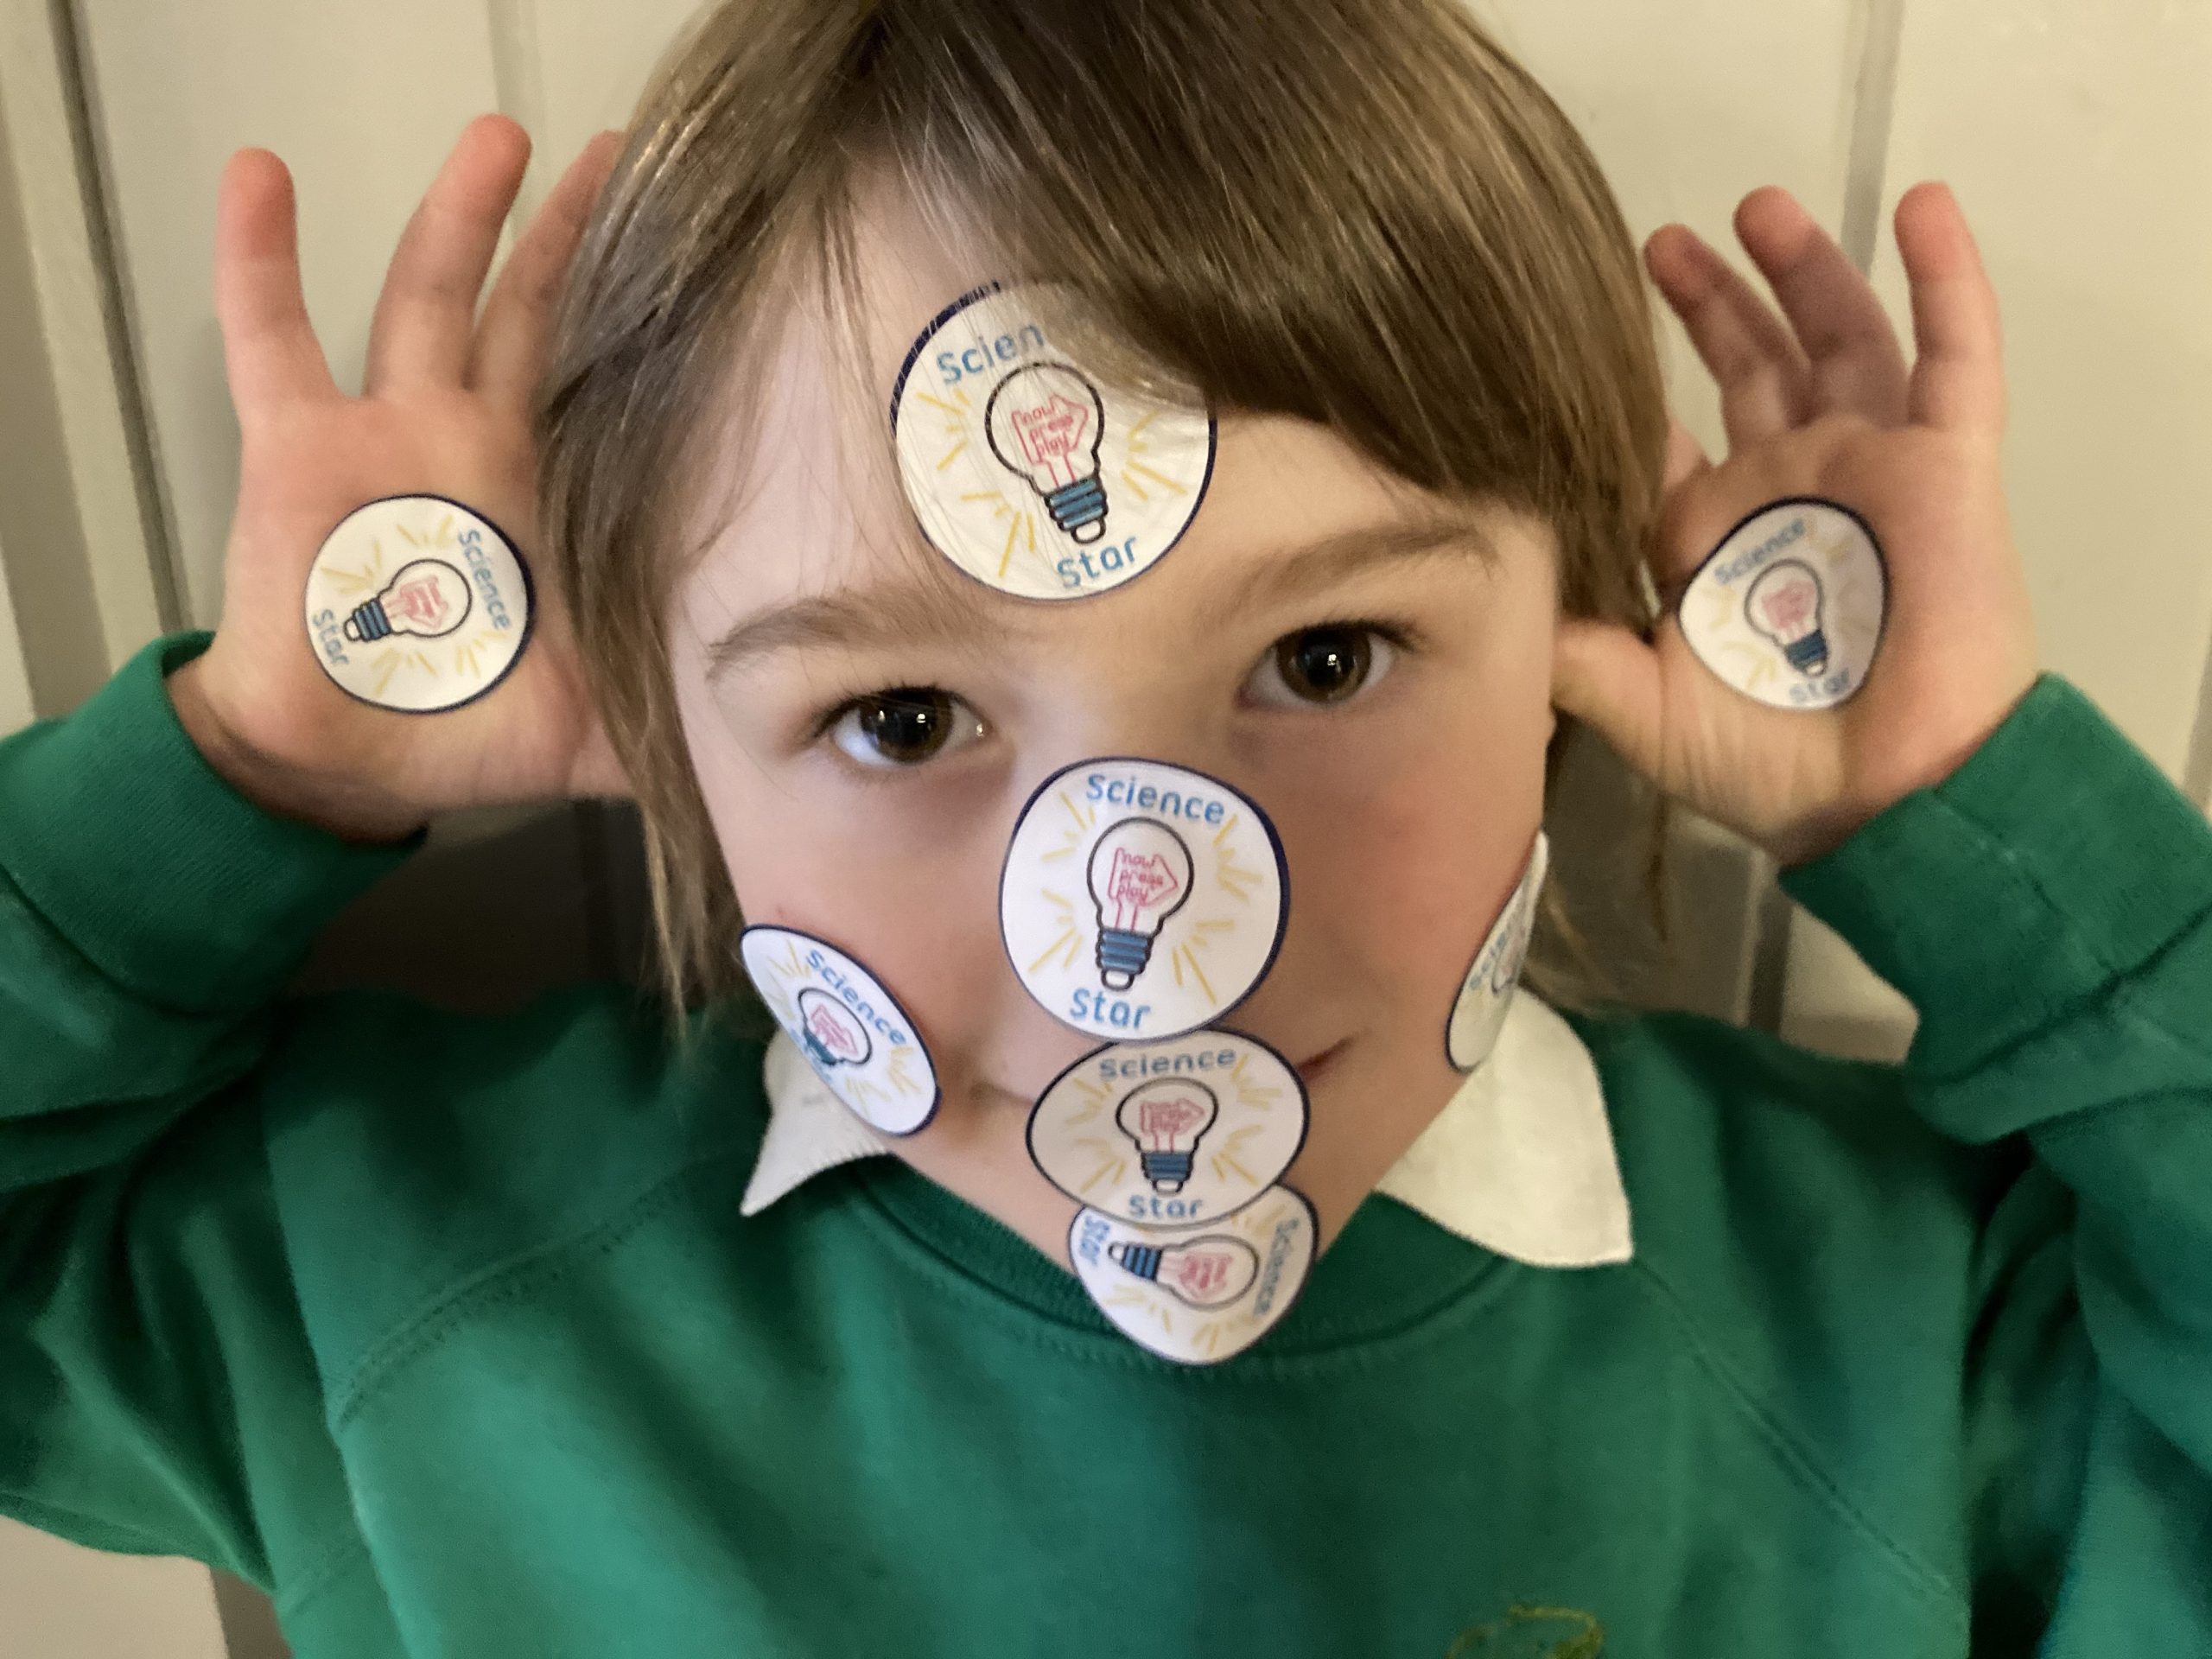 Child modelling STEM Star Sticker award and grinning